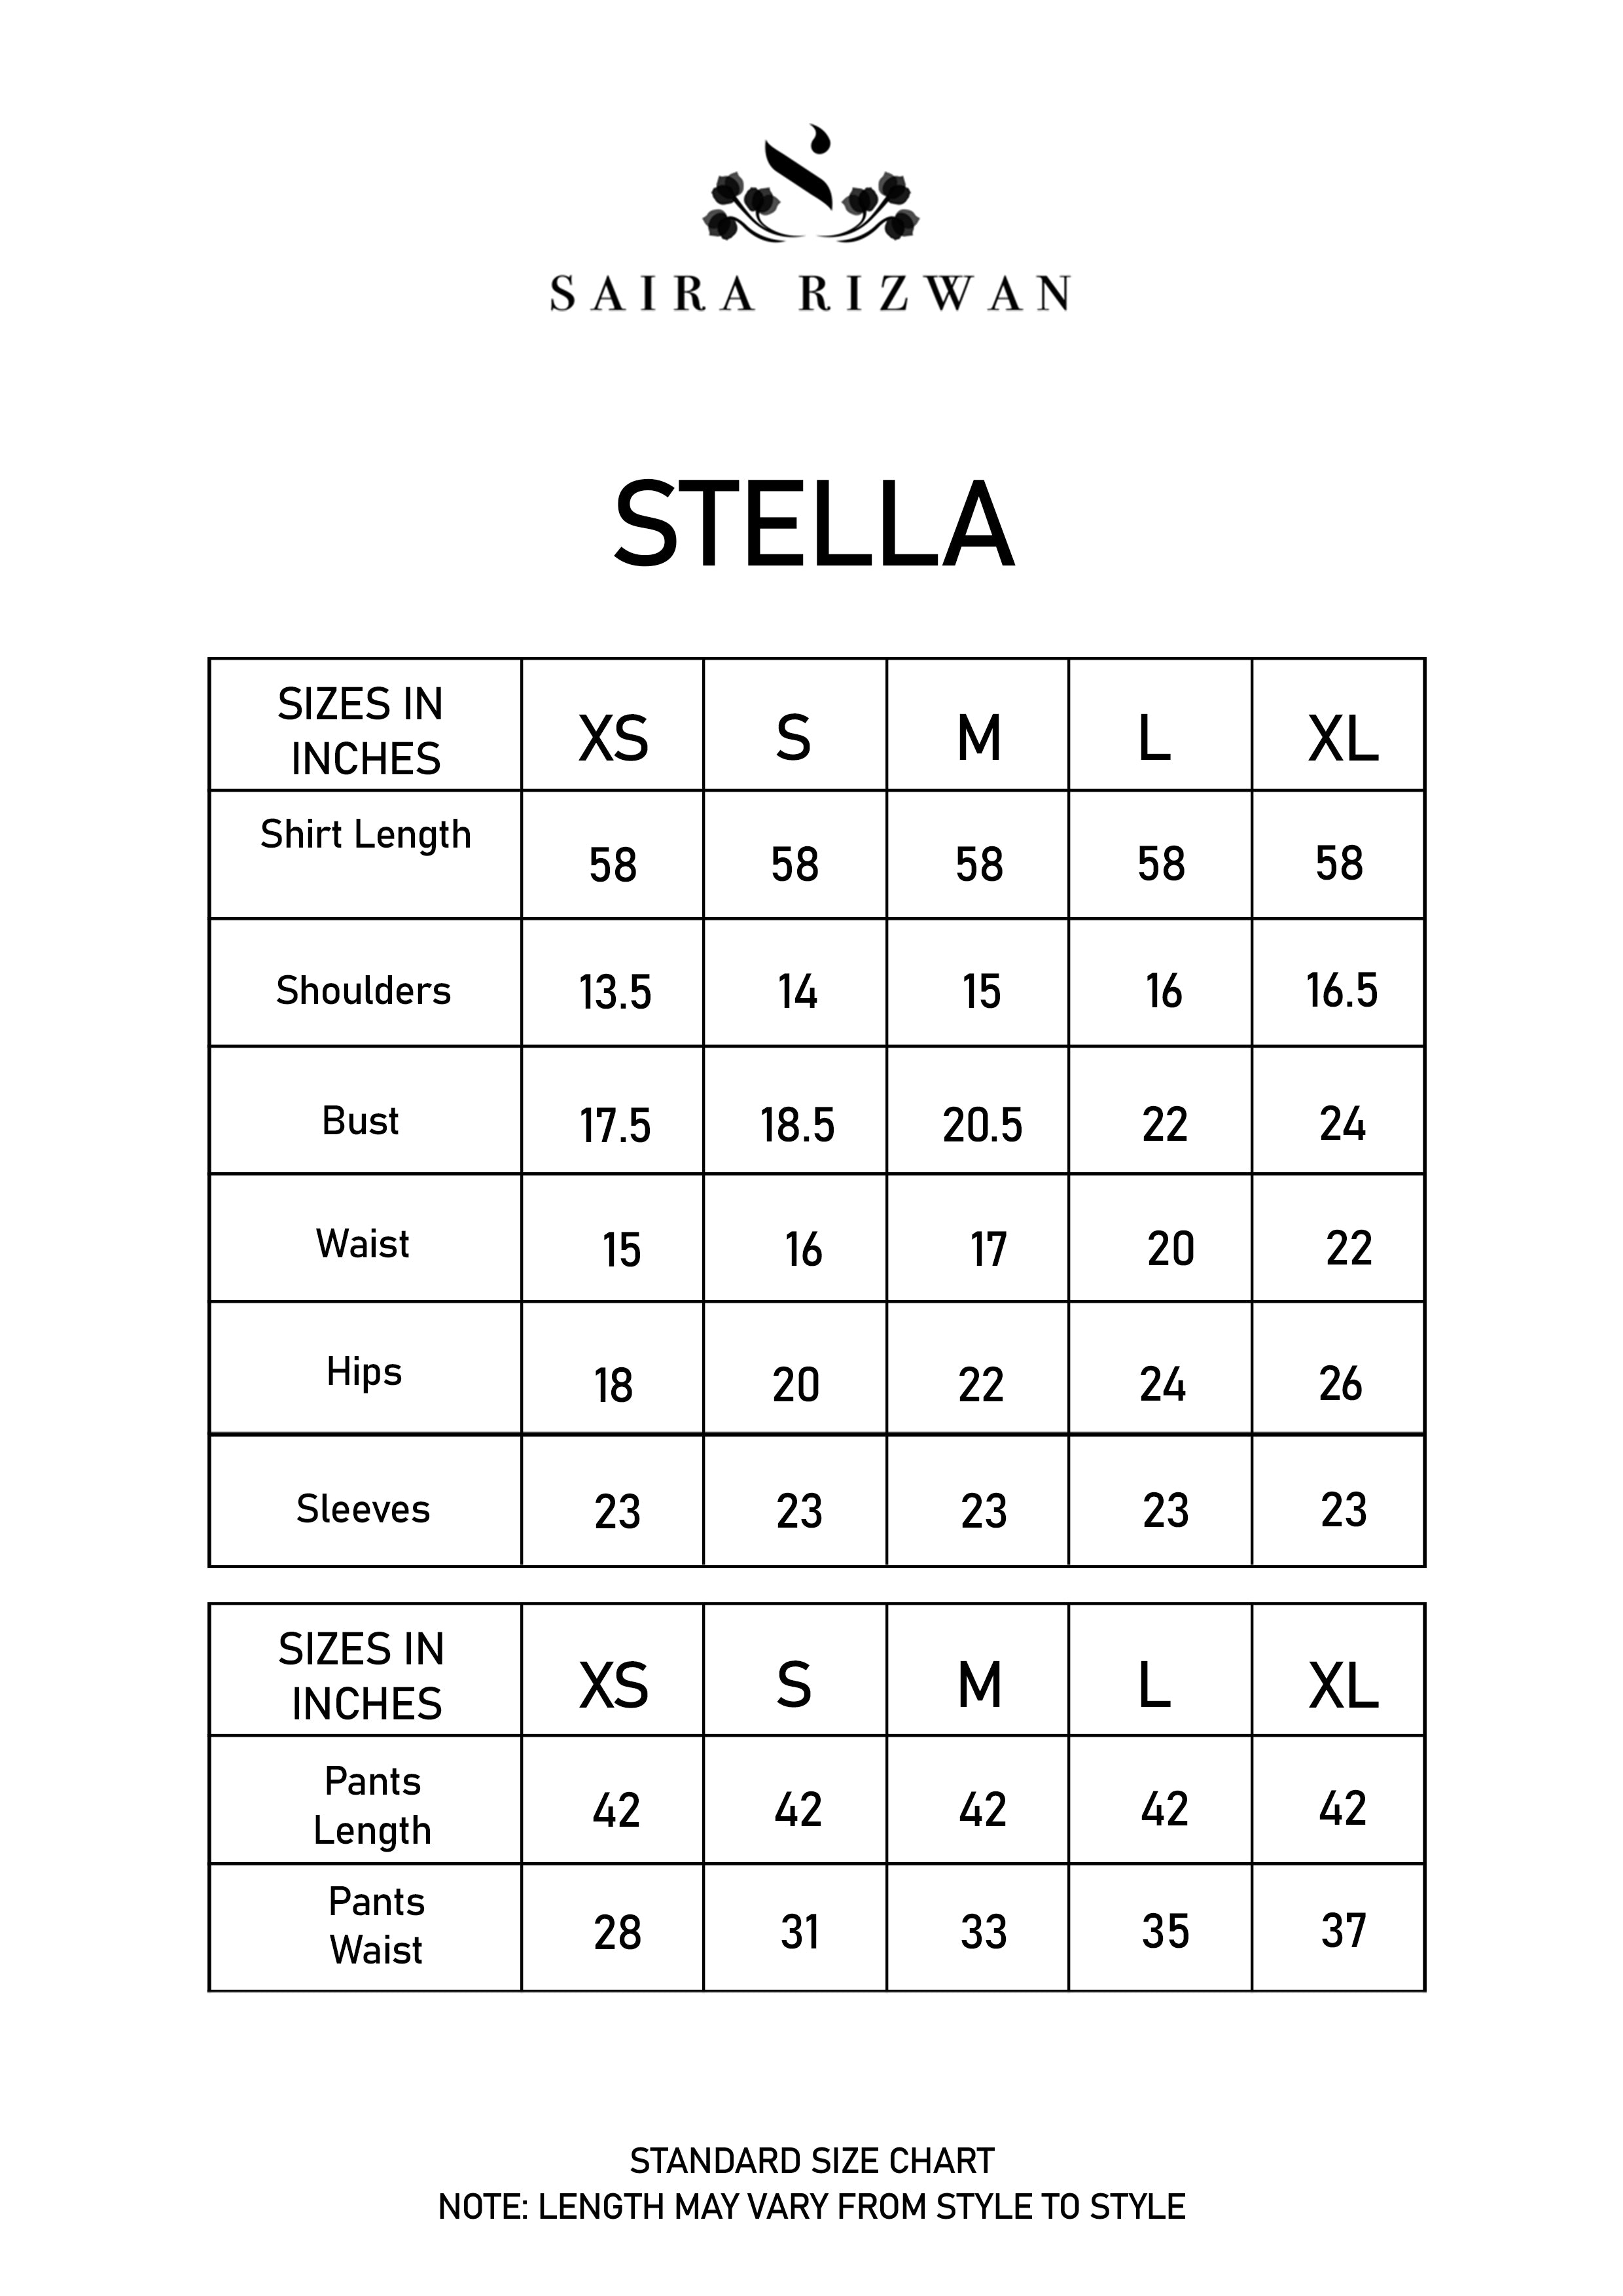 STELA SR-05